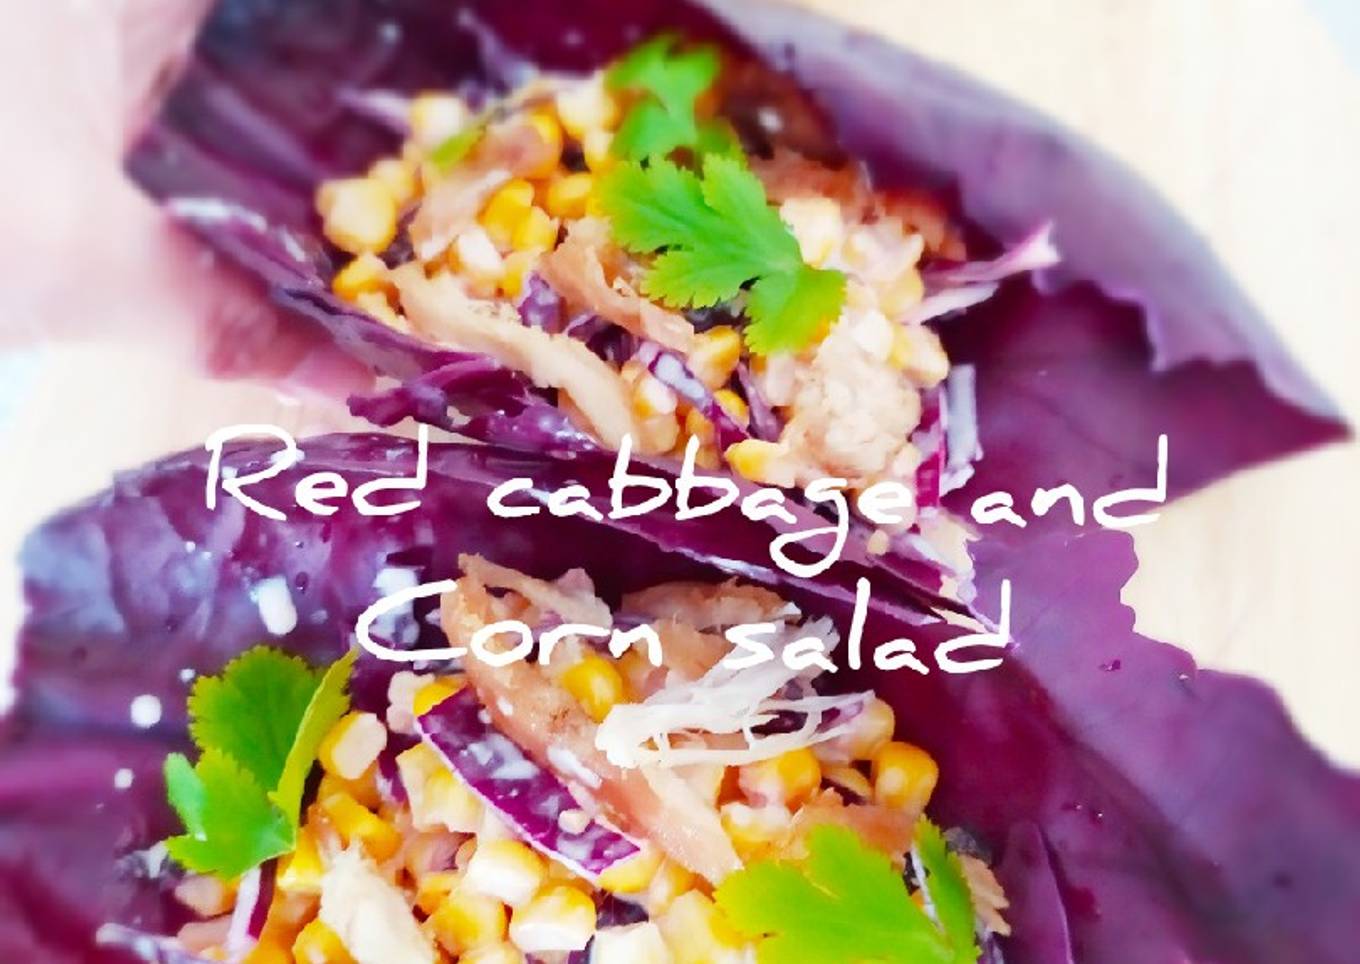 Red cabbage & corn salad